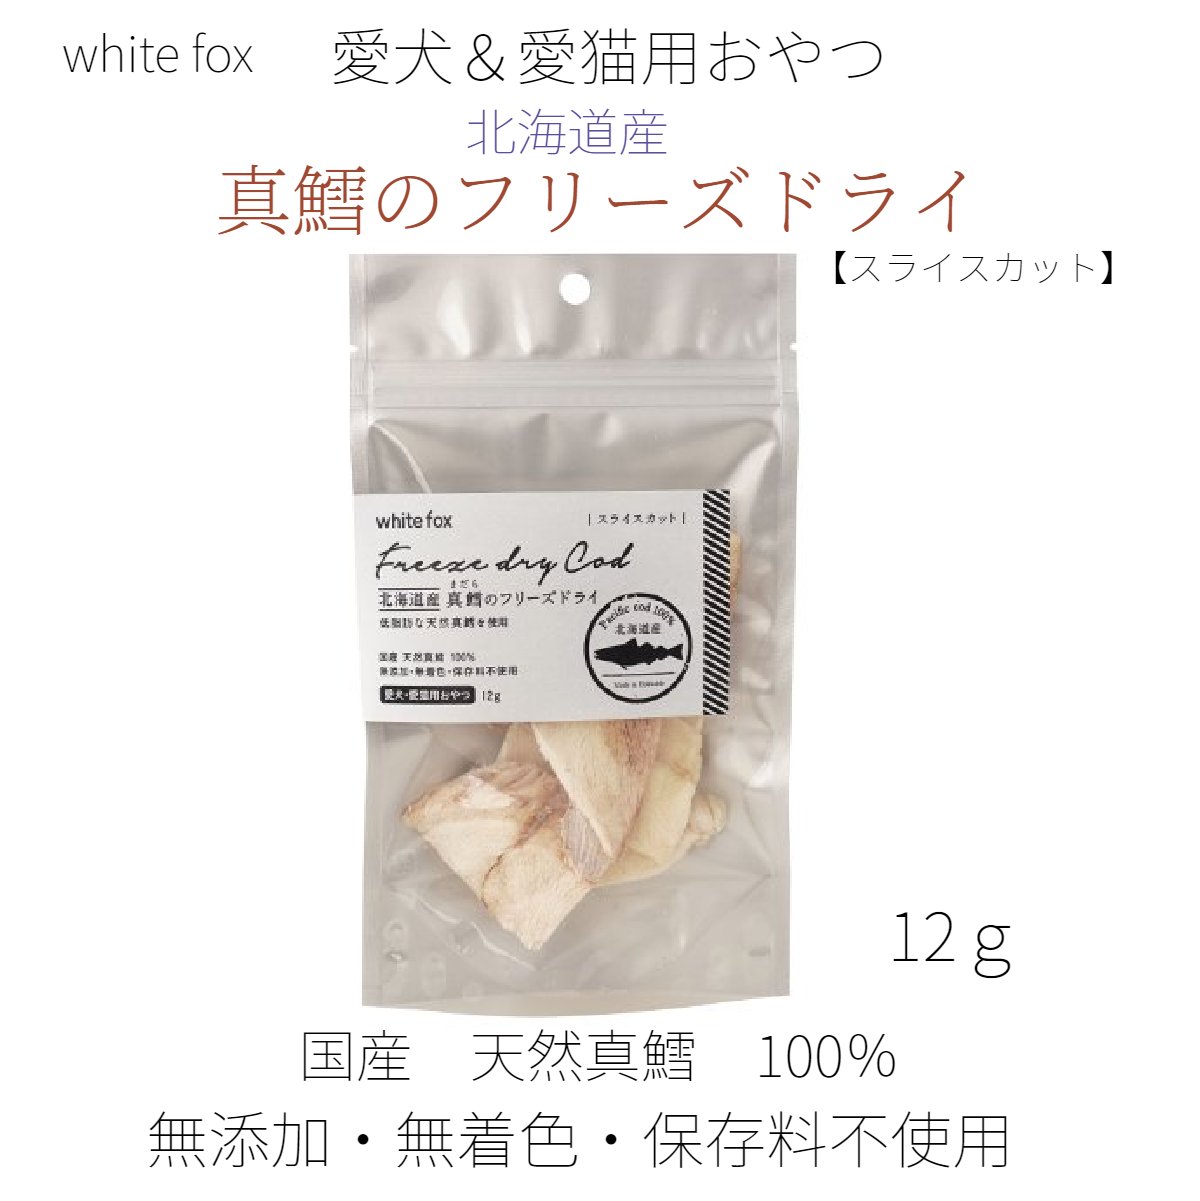 white fox 北海道産 真鱈のフリーズドライ 12g 